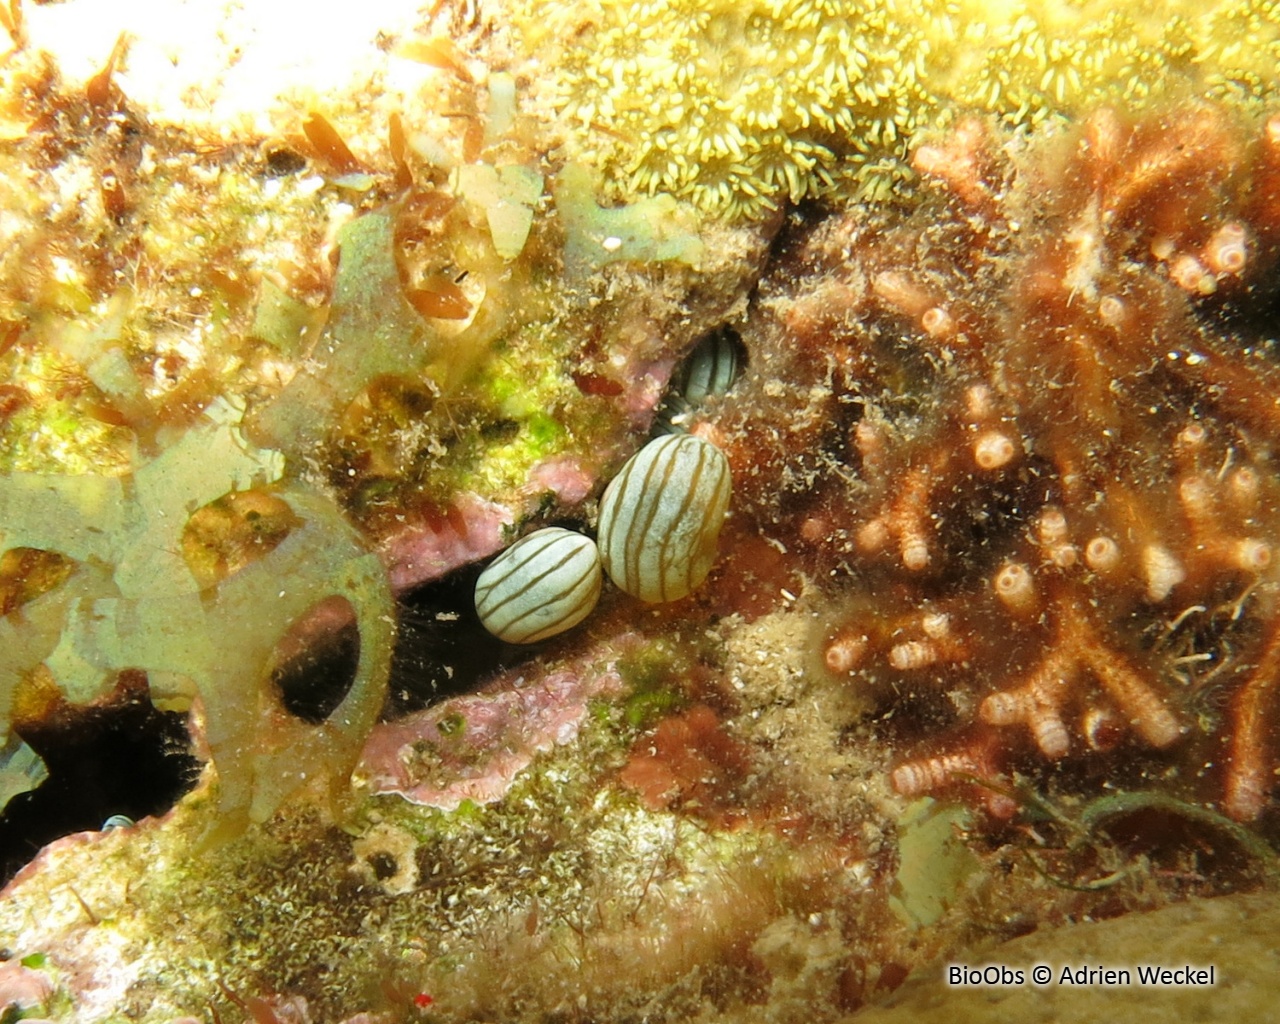 Anémone secrète - Lebrunia coralligens - Adrien Weckel - BioObs